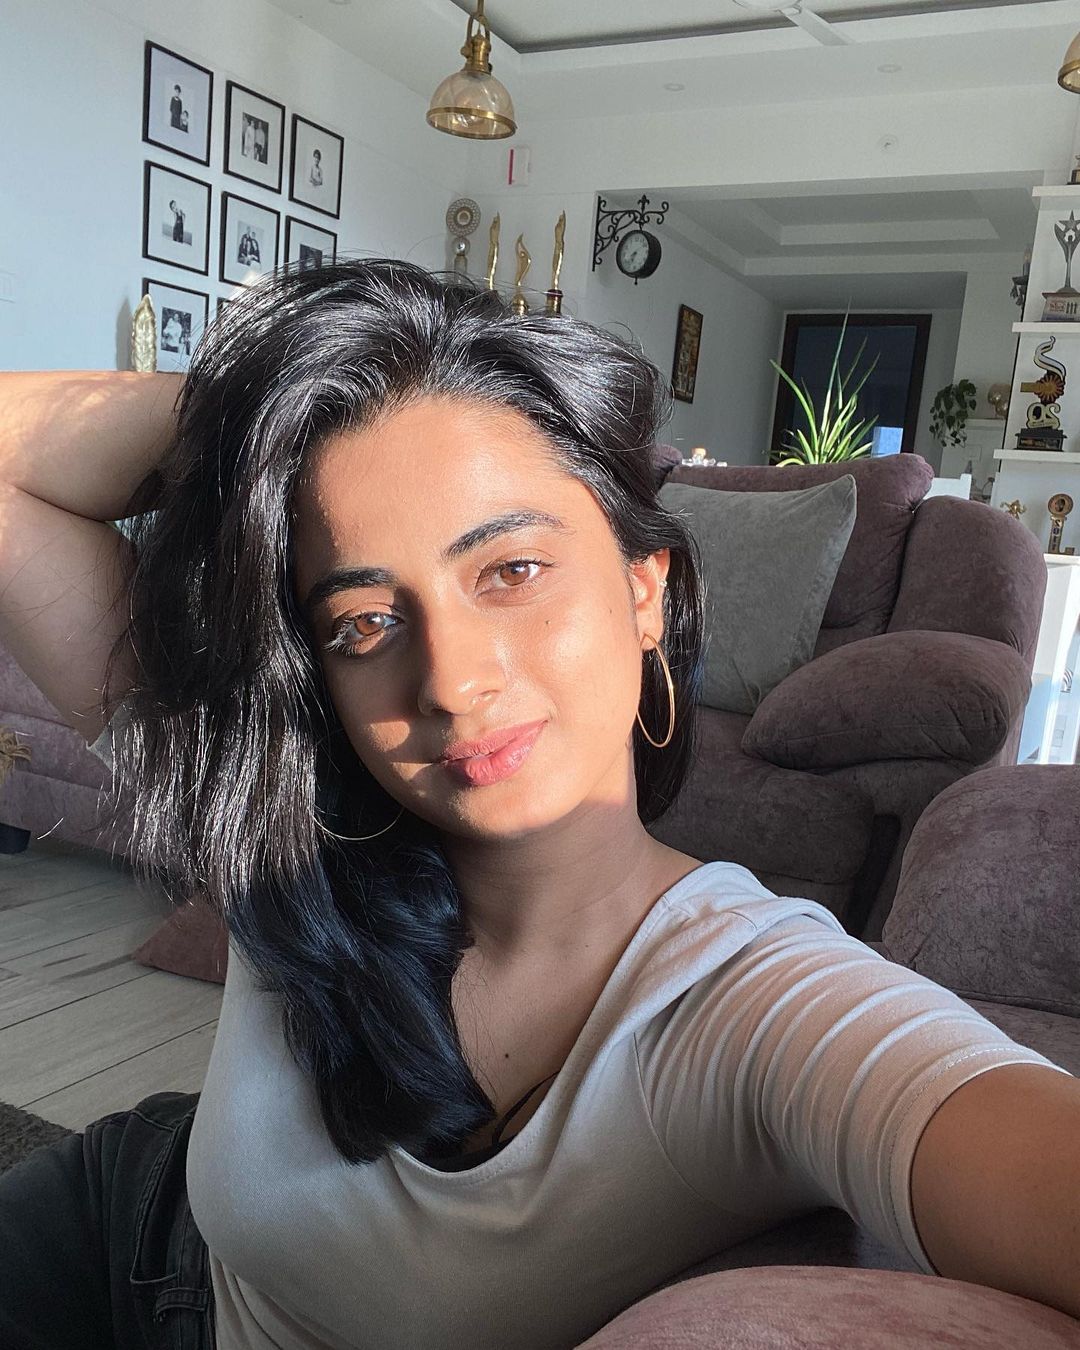 1080px x 1350px - Namitha Pramod looking beautiful in new sunkissed photos photos went viral  in socialmedia | Namitha Pramod : à´ªà´Ÿàµà´Ÿà´¿à´•àµà´•àµà´Ÿàµà´Ÿà´¿à´¯àµ‹à´ŸàµŠà´ªàµà´ªà´‚ à´¸àµº à´•à´¿à´¸àµâ€Œà´¡àµâ€Œ  à´šà´¿à´¤àµà´°à´™àµà´™à´³àµà´®à´¾à´¯à´¿ à´¨à´